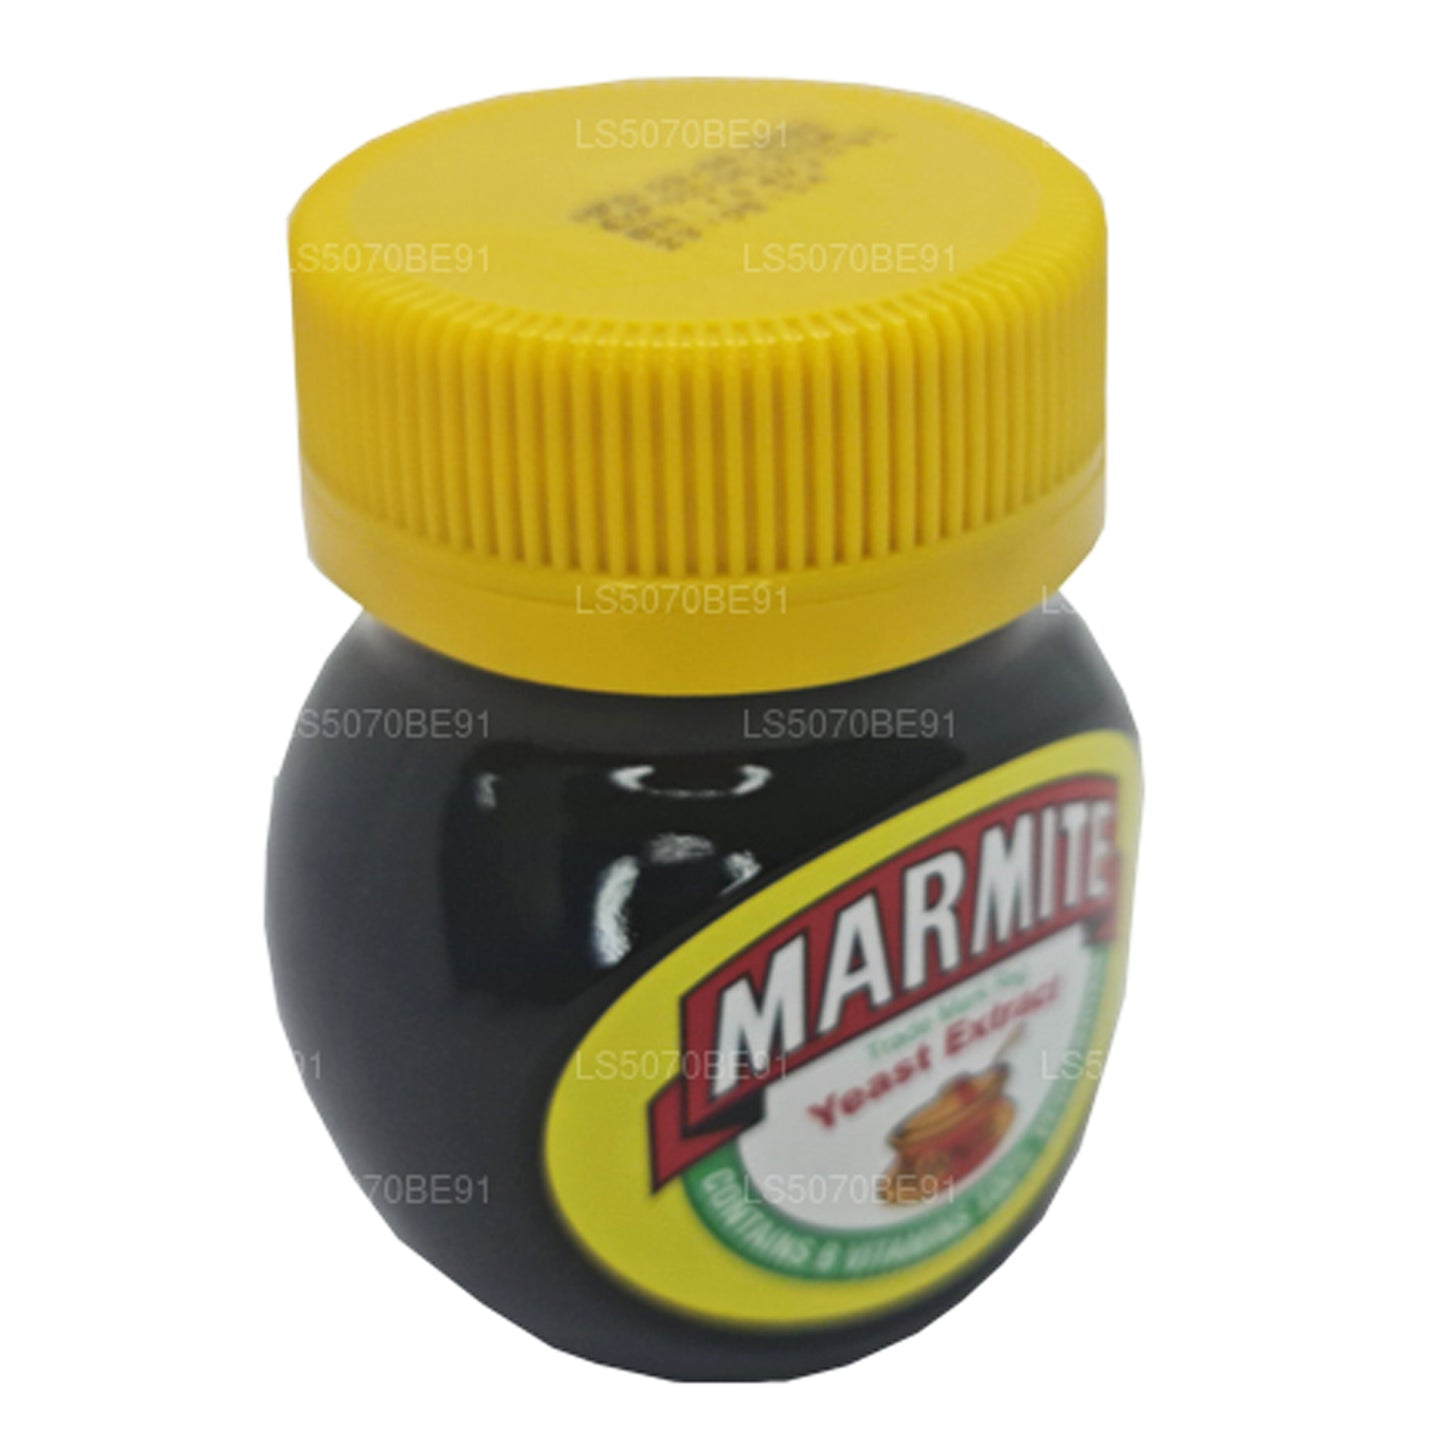 Marmite gærekstrakt (100 g)